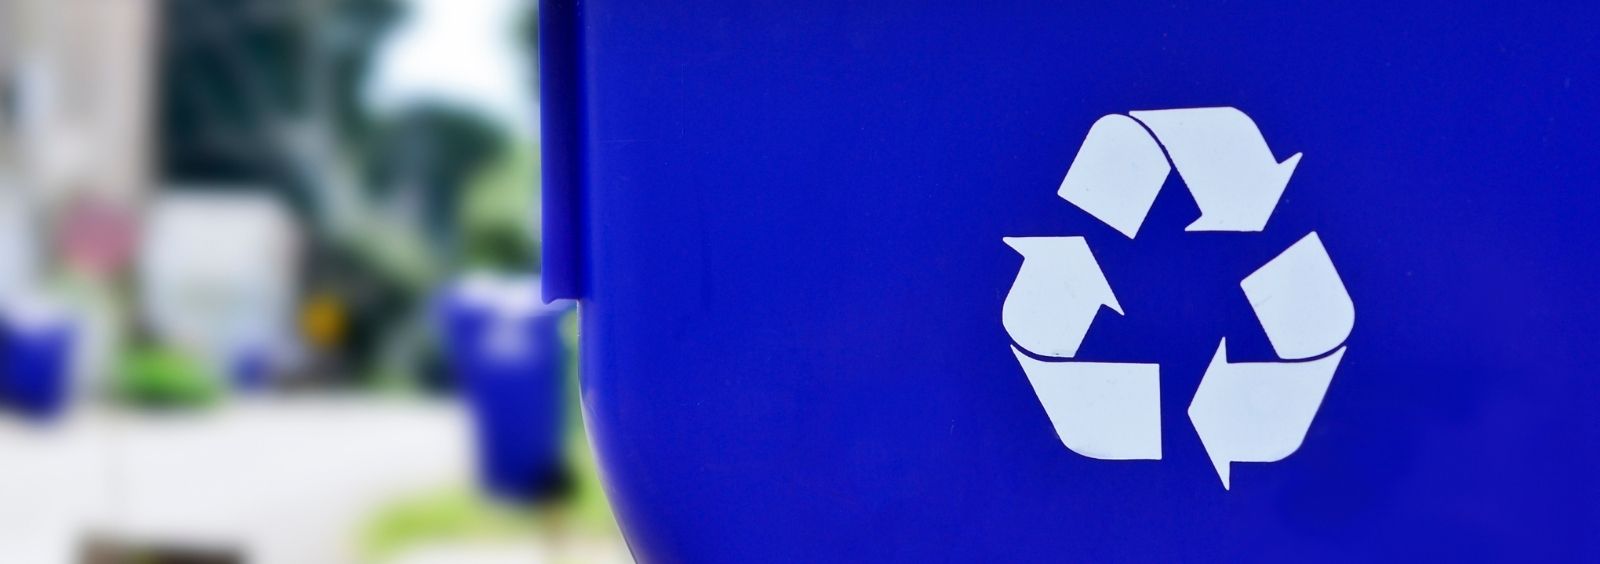 A blue recycling bin on a city street.